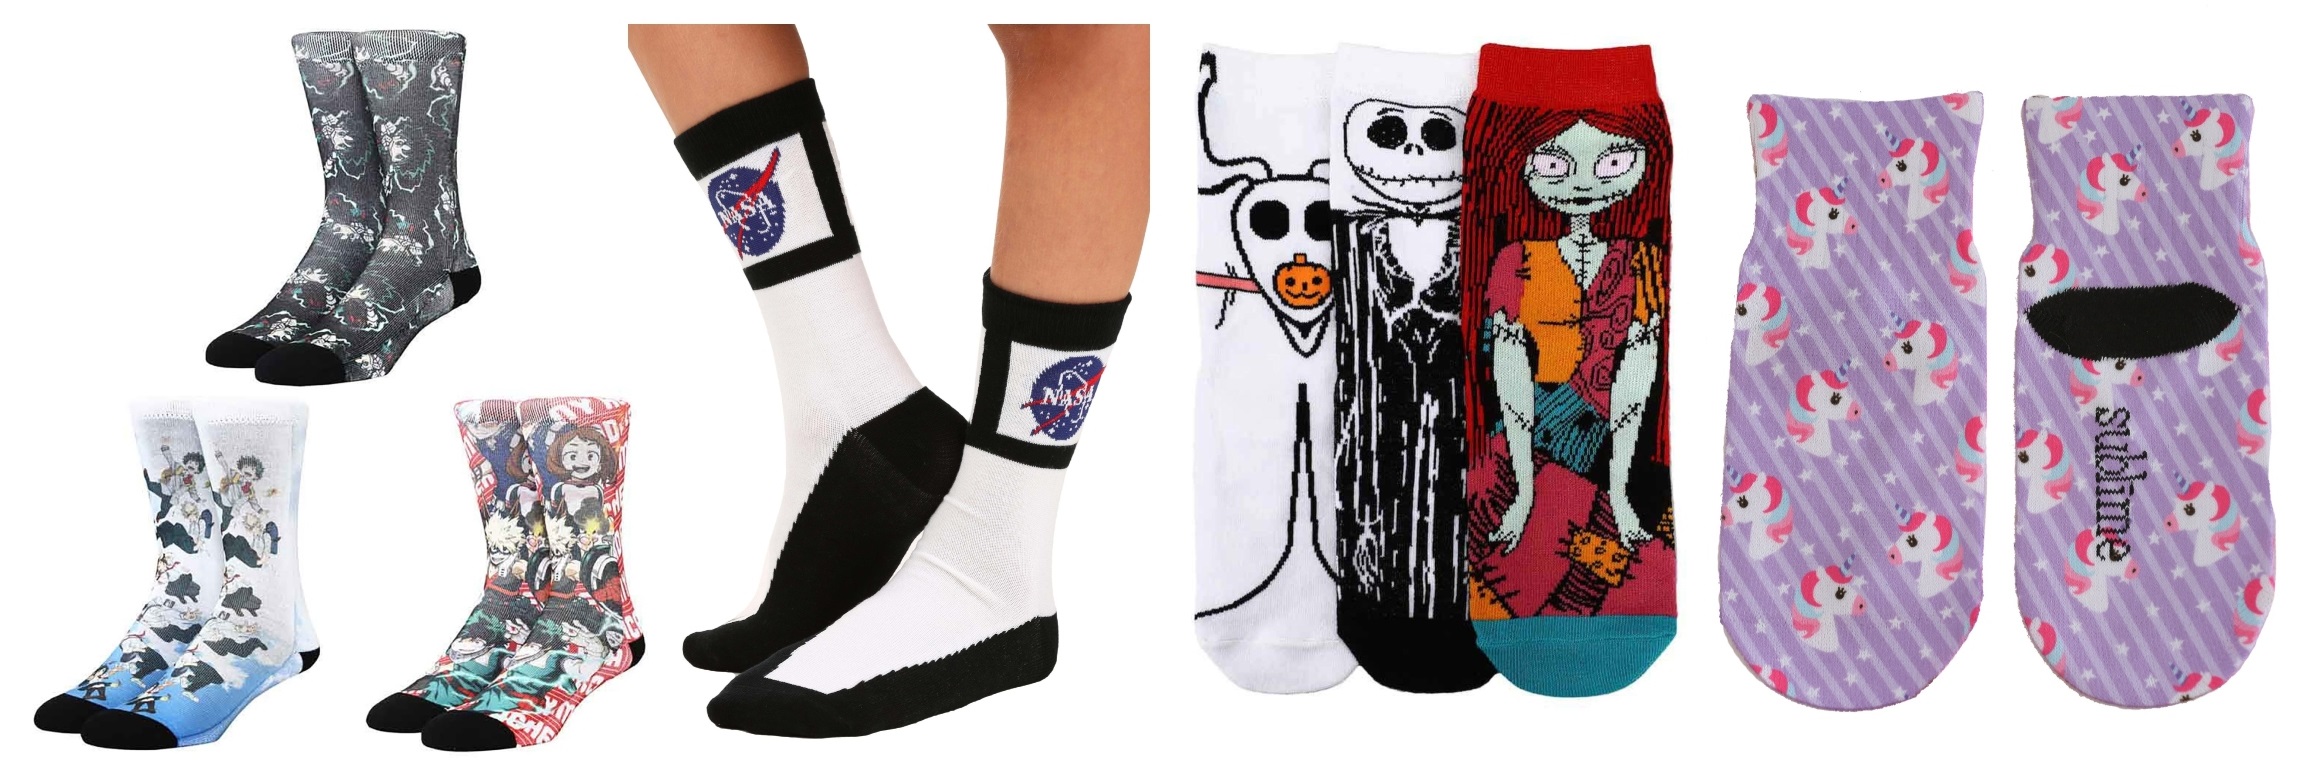 Nerdy Socks for Kids